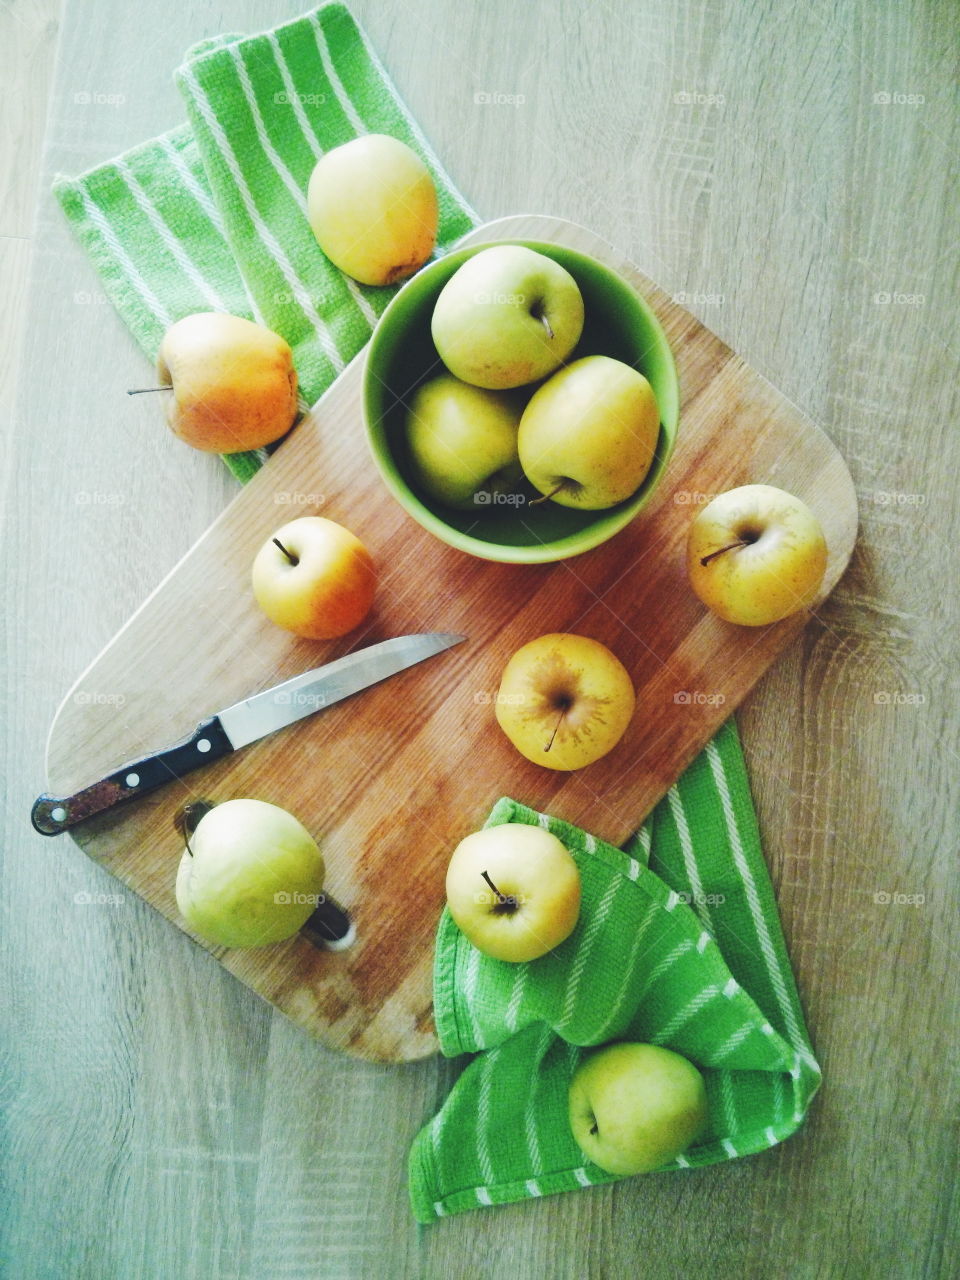 Apples. Apples on wooden desk